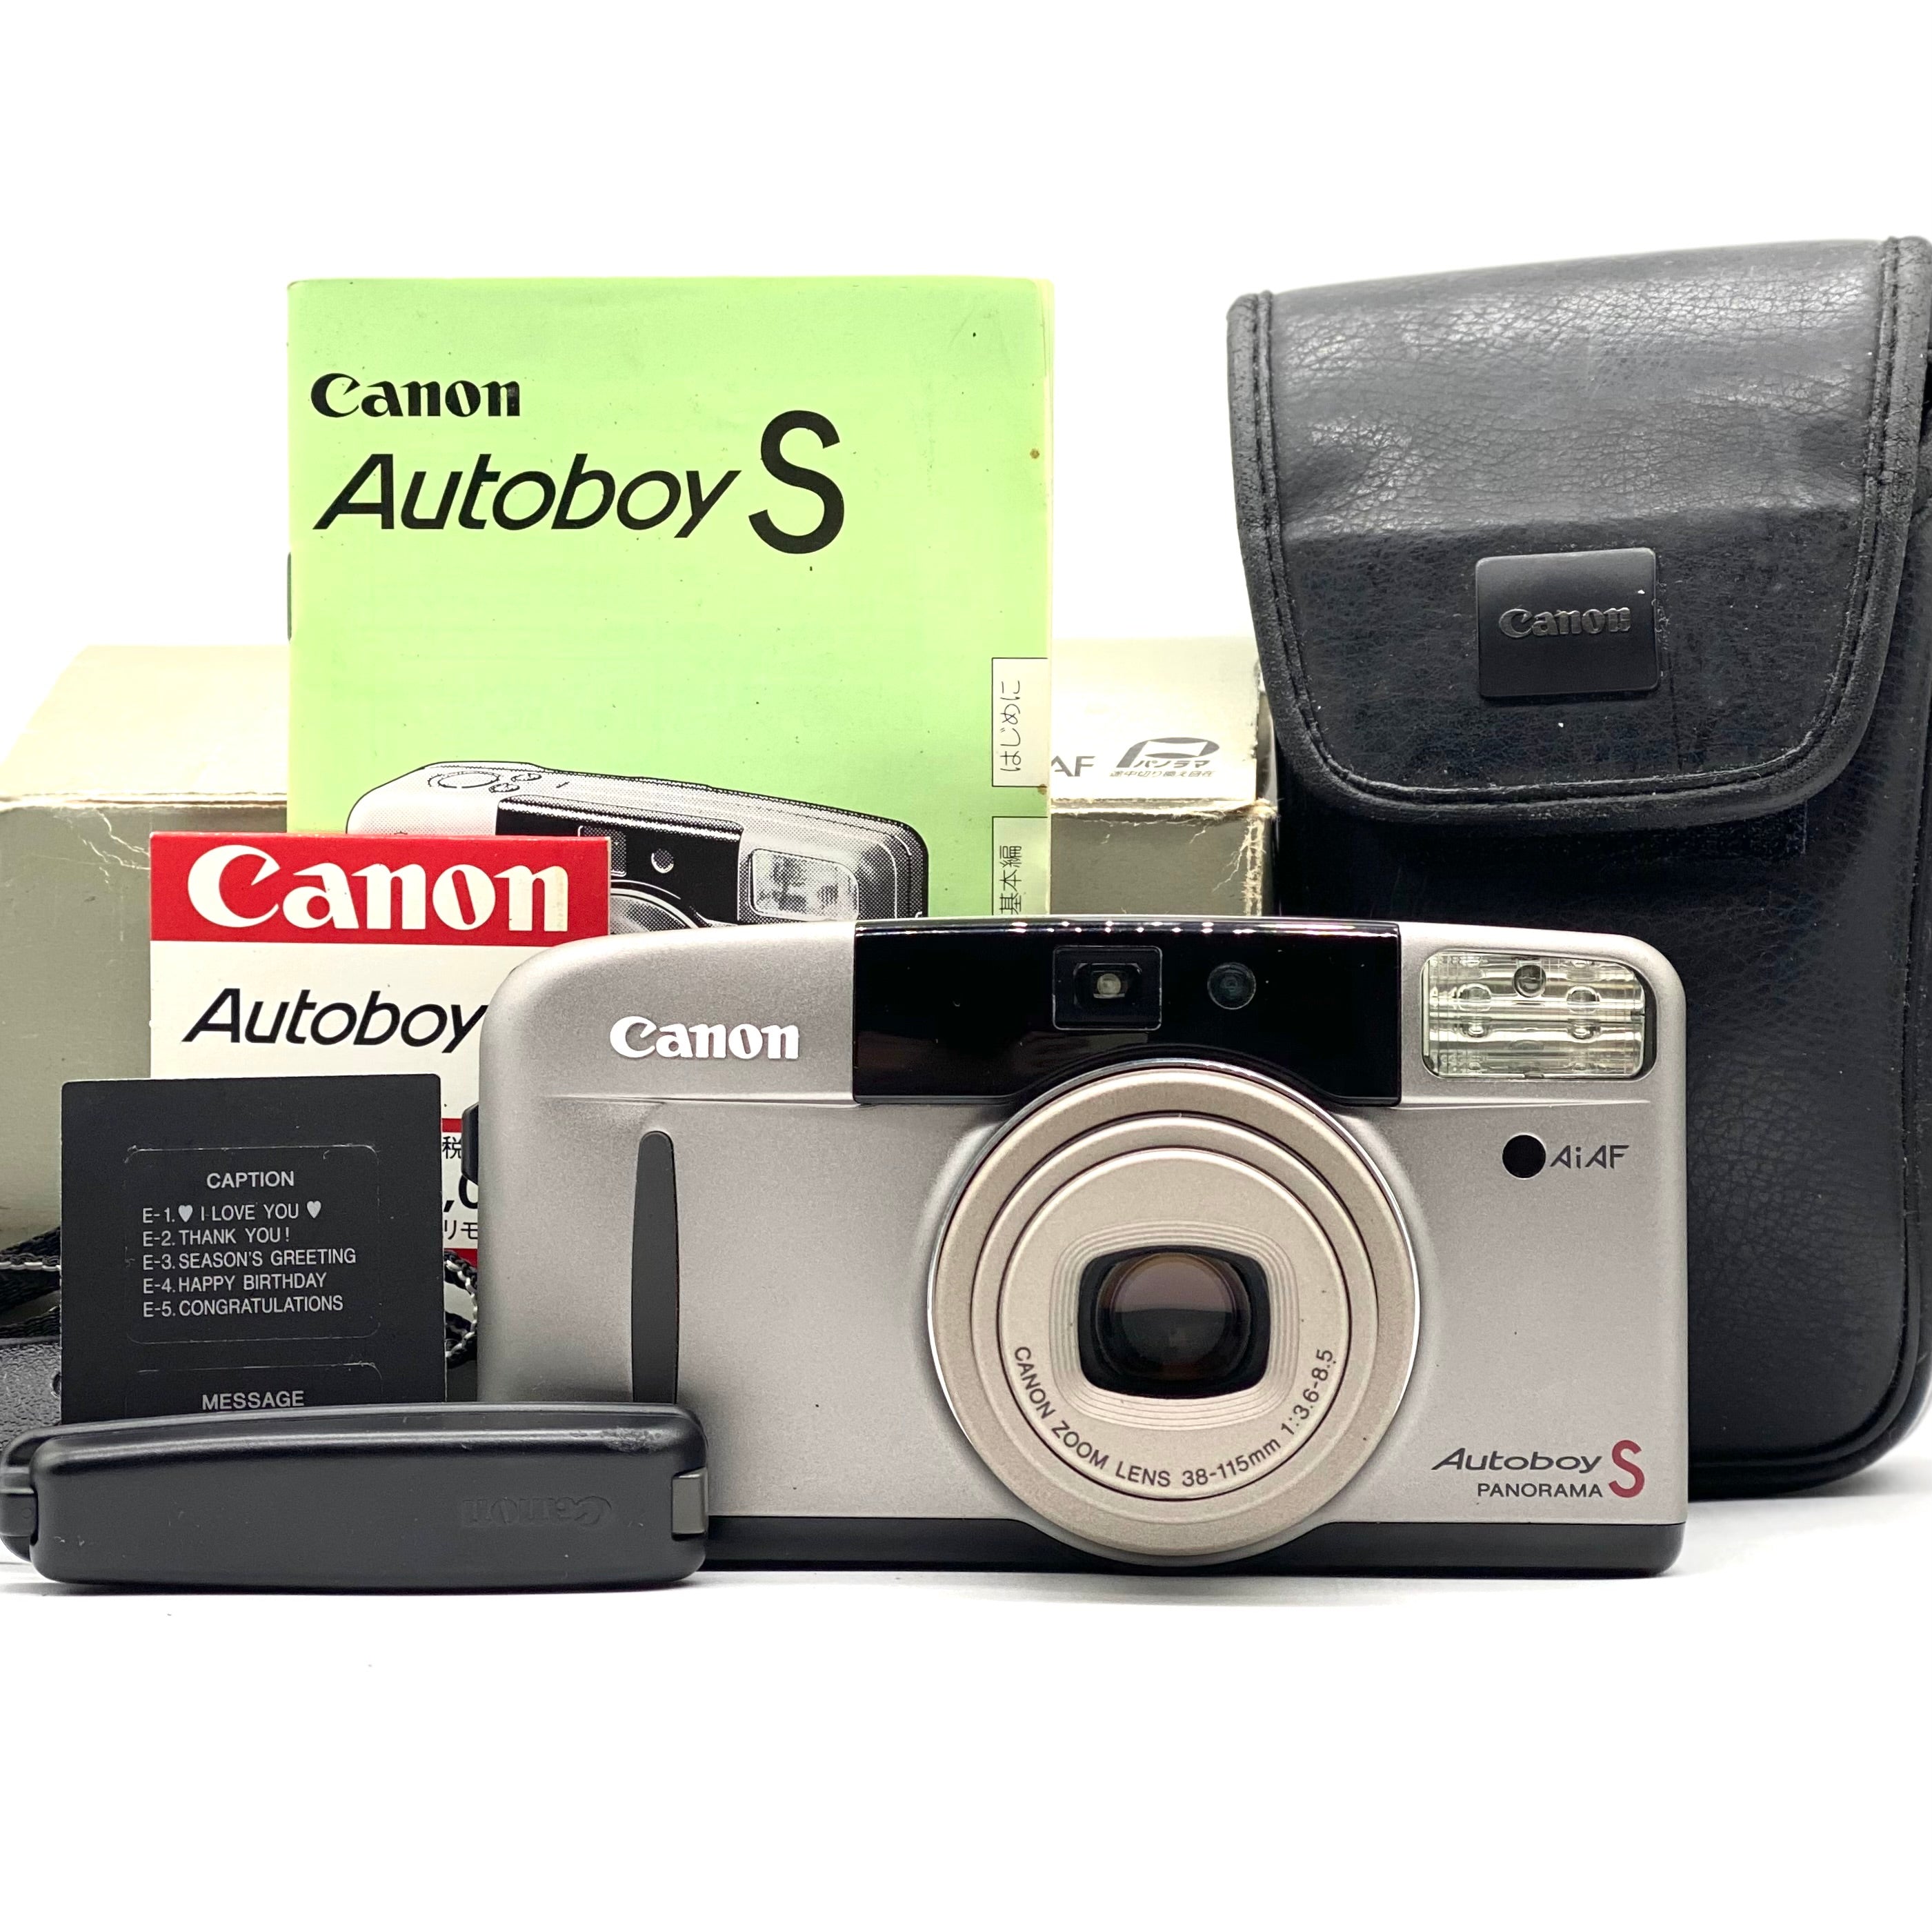 Canon Autoboy S (Full Box Set)